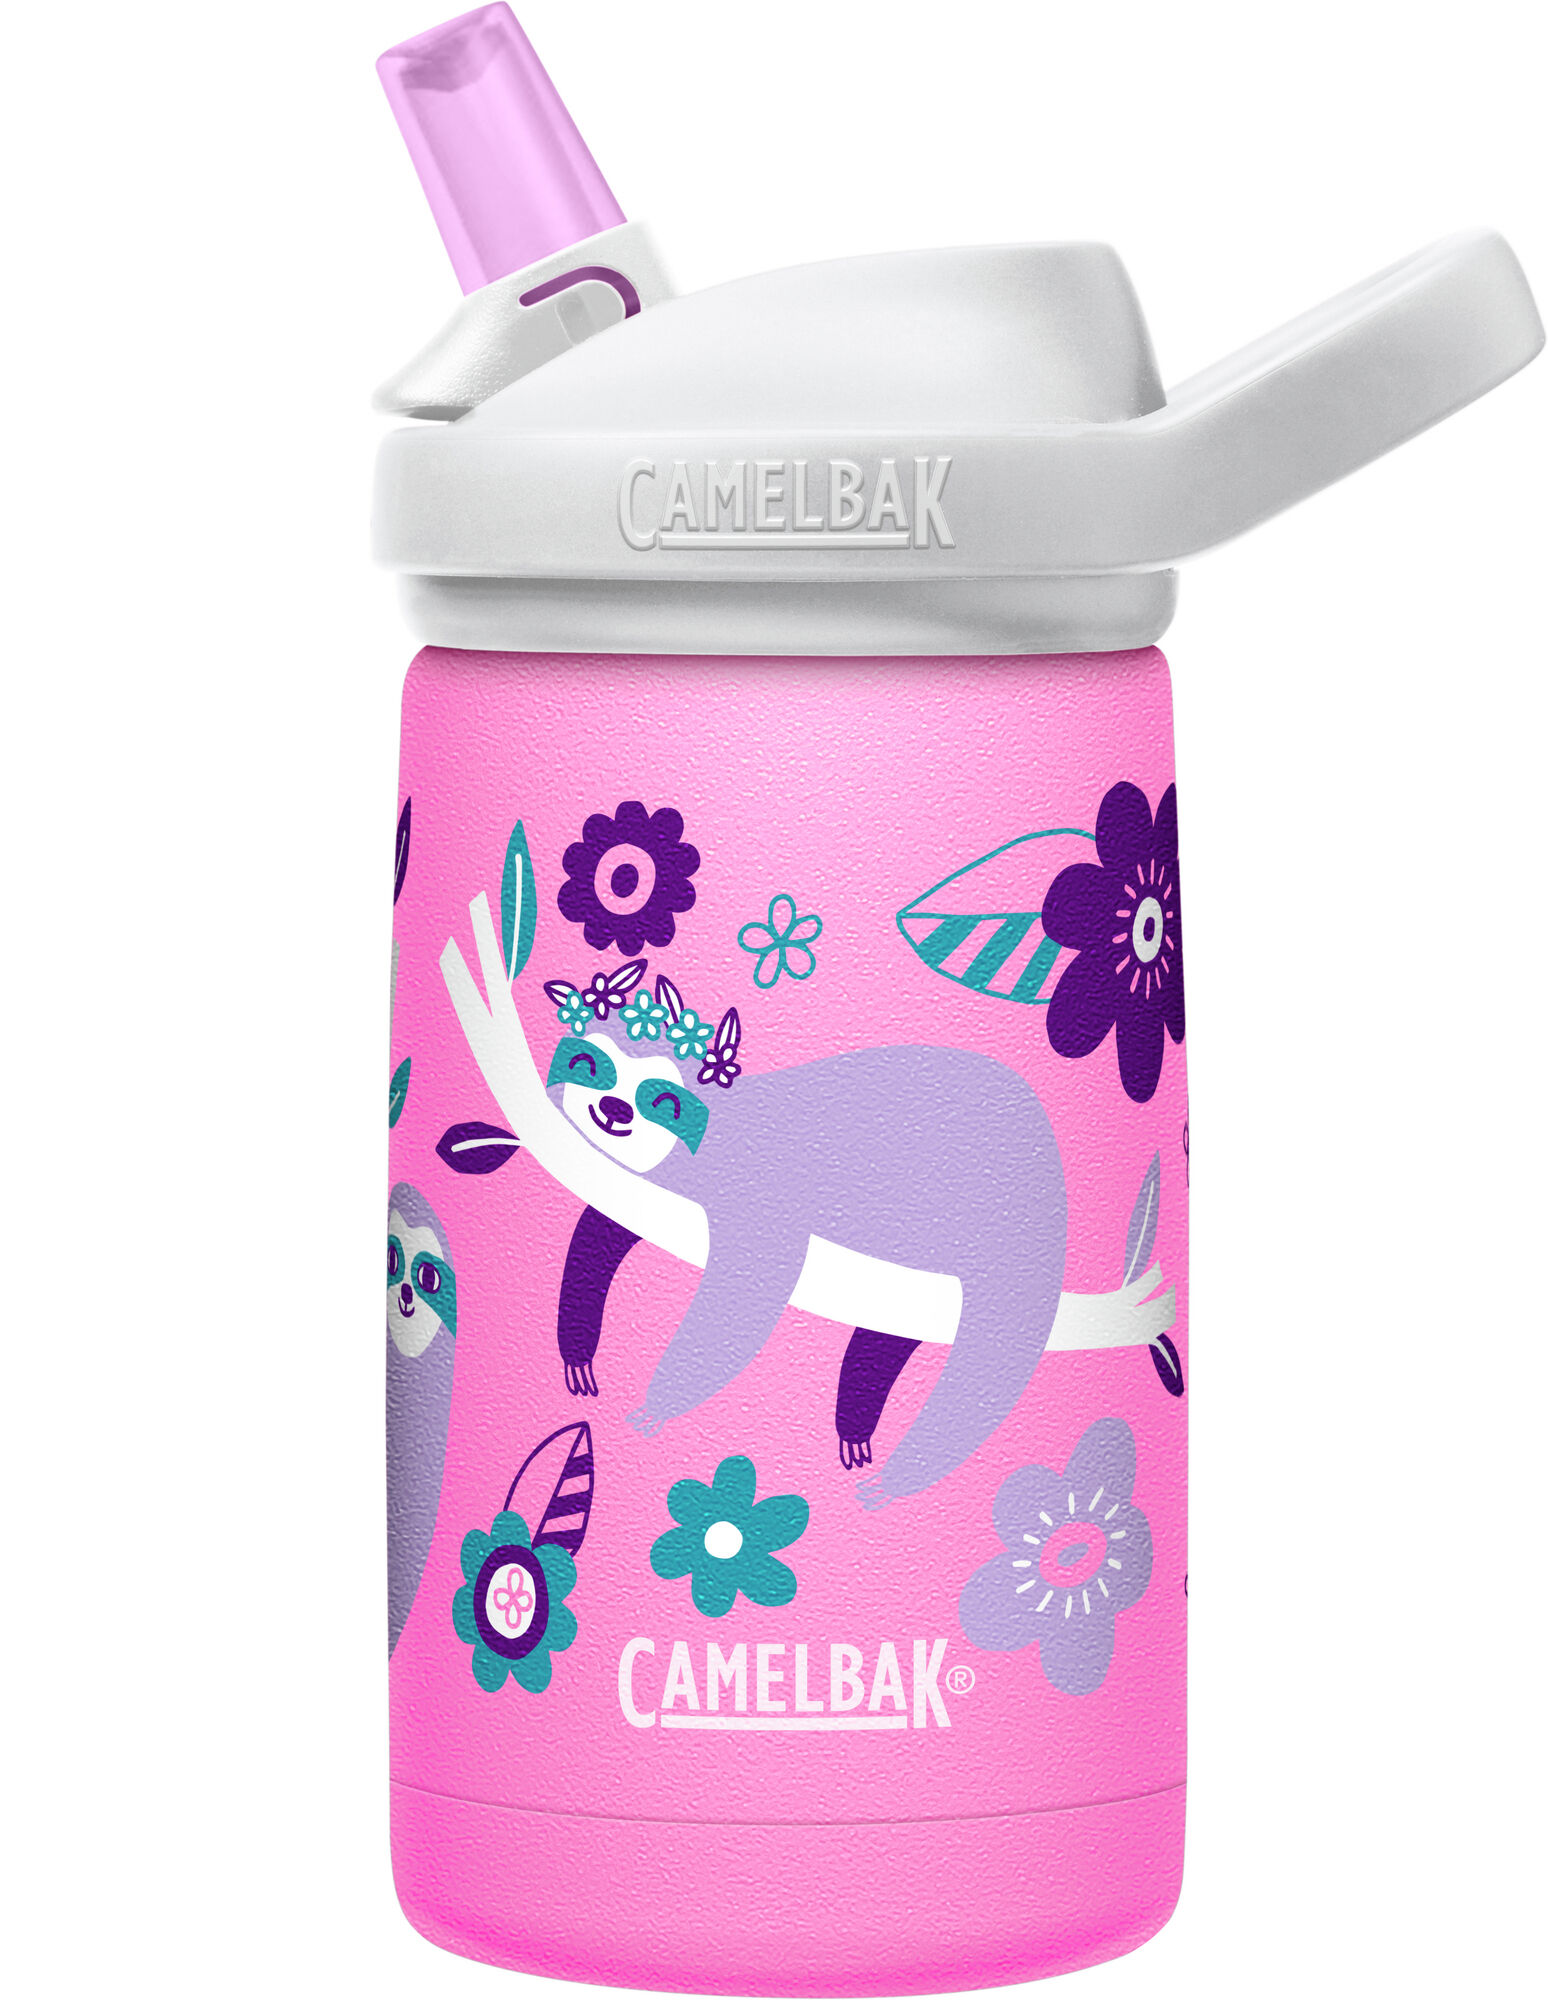 Camelbak Eddy Kids Anti-Spill Water/Drinks Hydration Bottle SNOW PRINCESS 